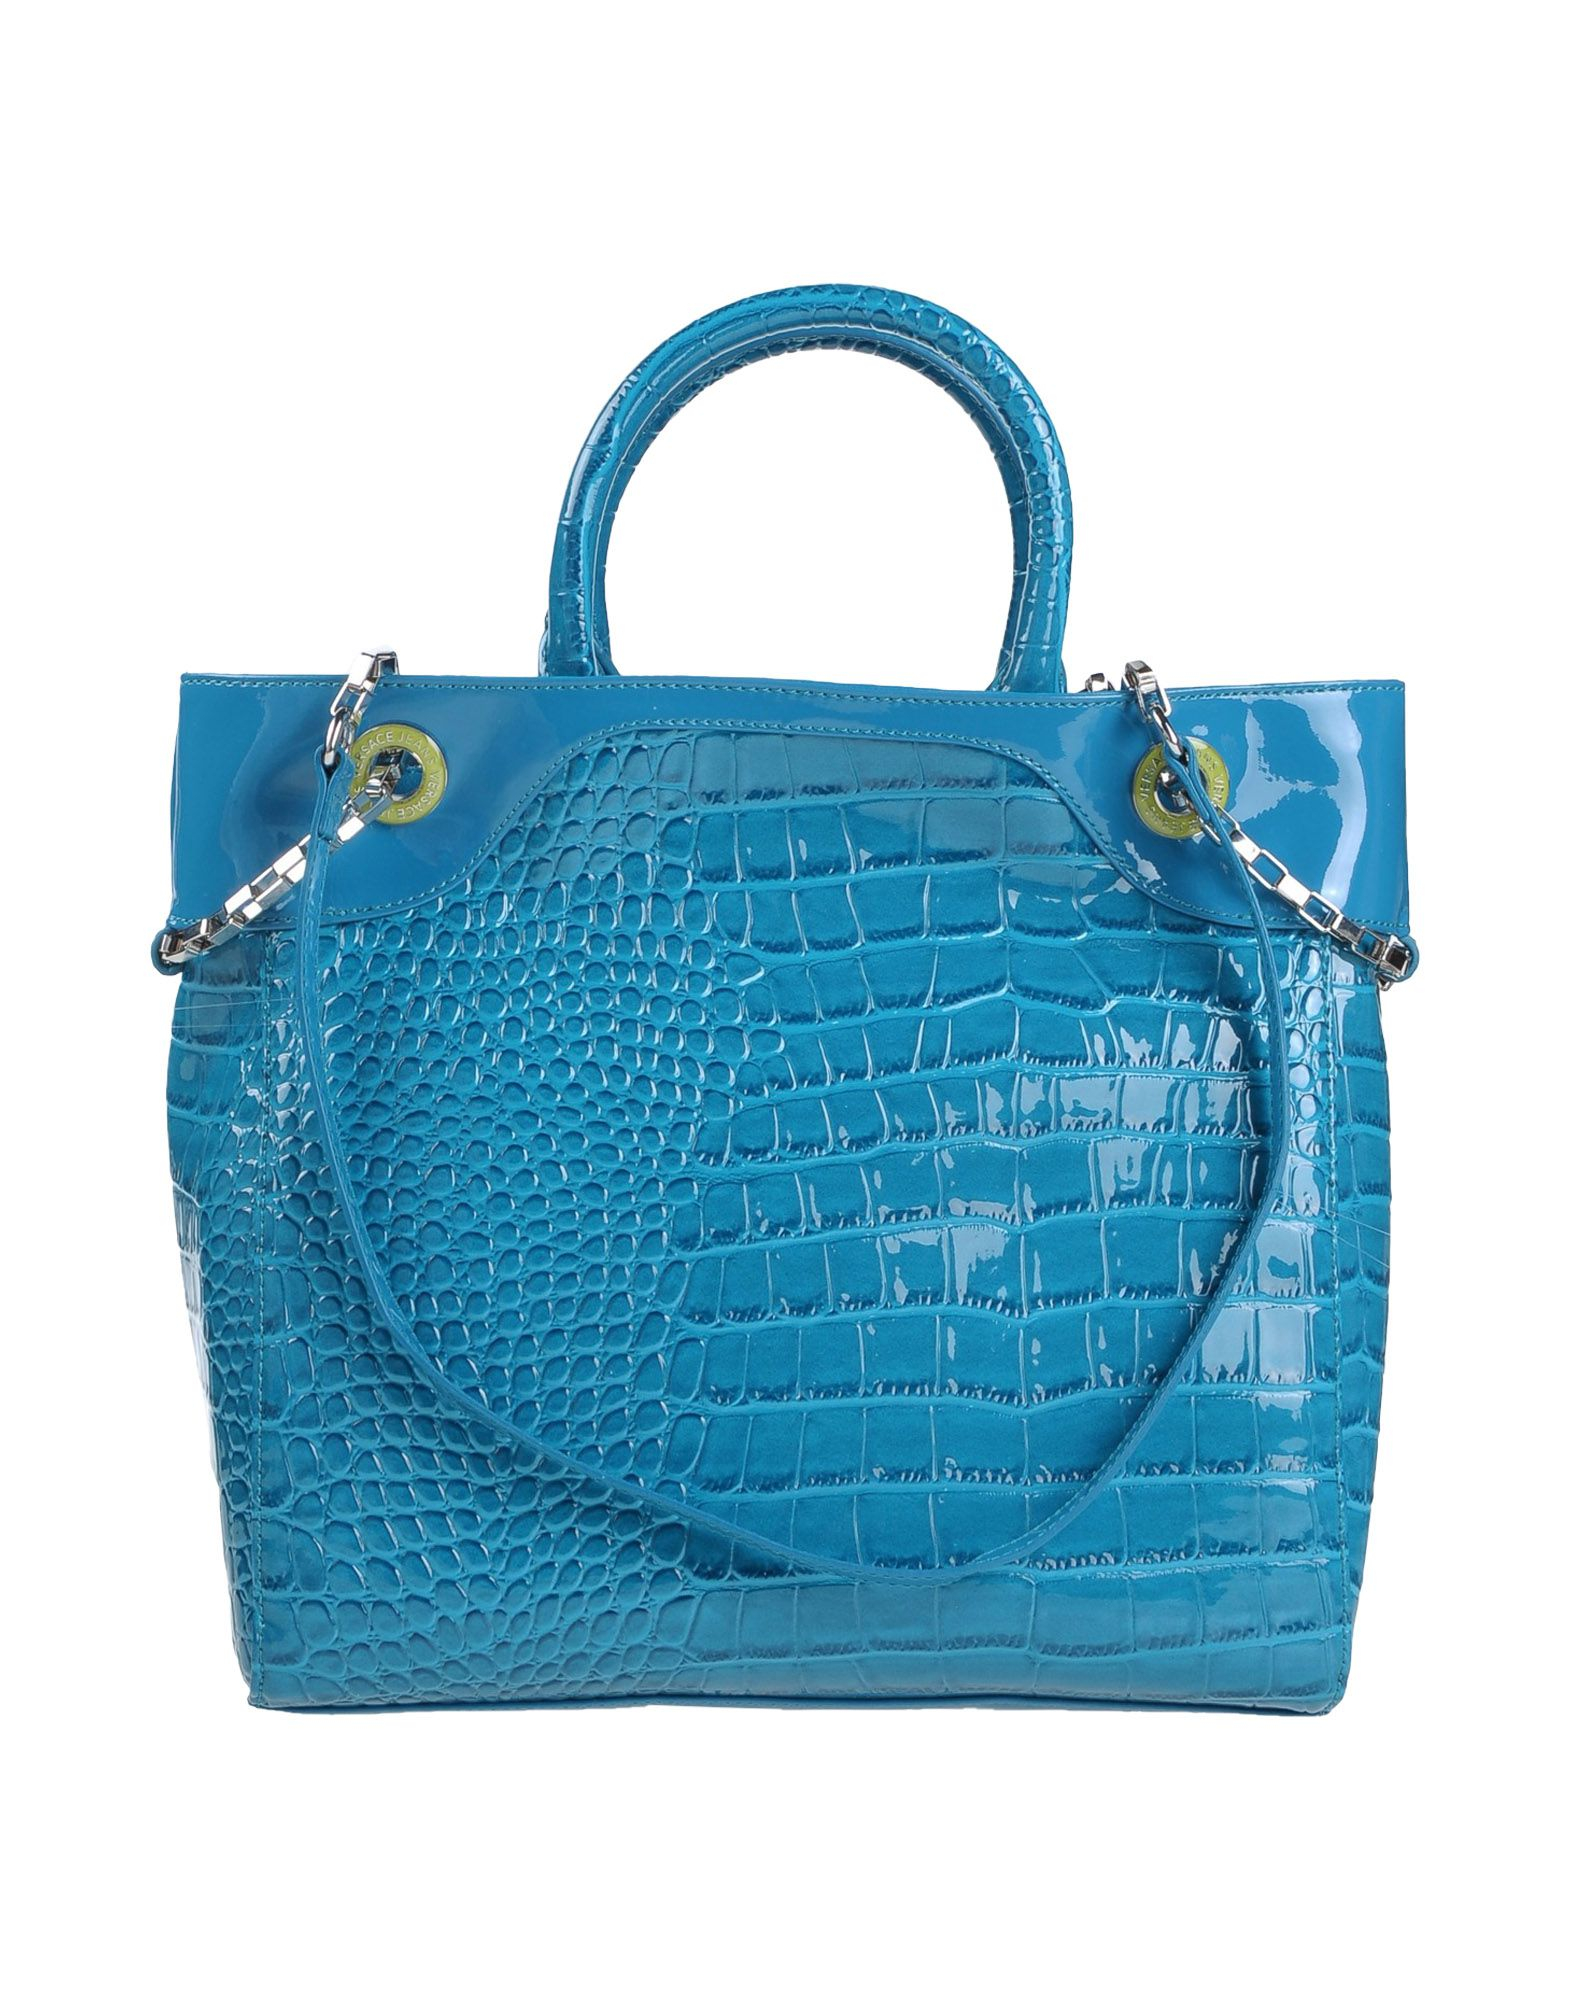 Lyst - Versace Jeans Handbag in Blue